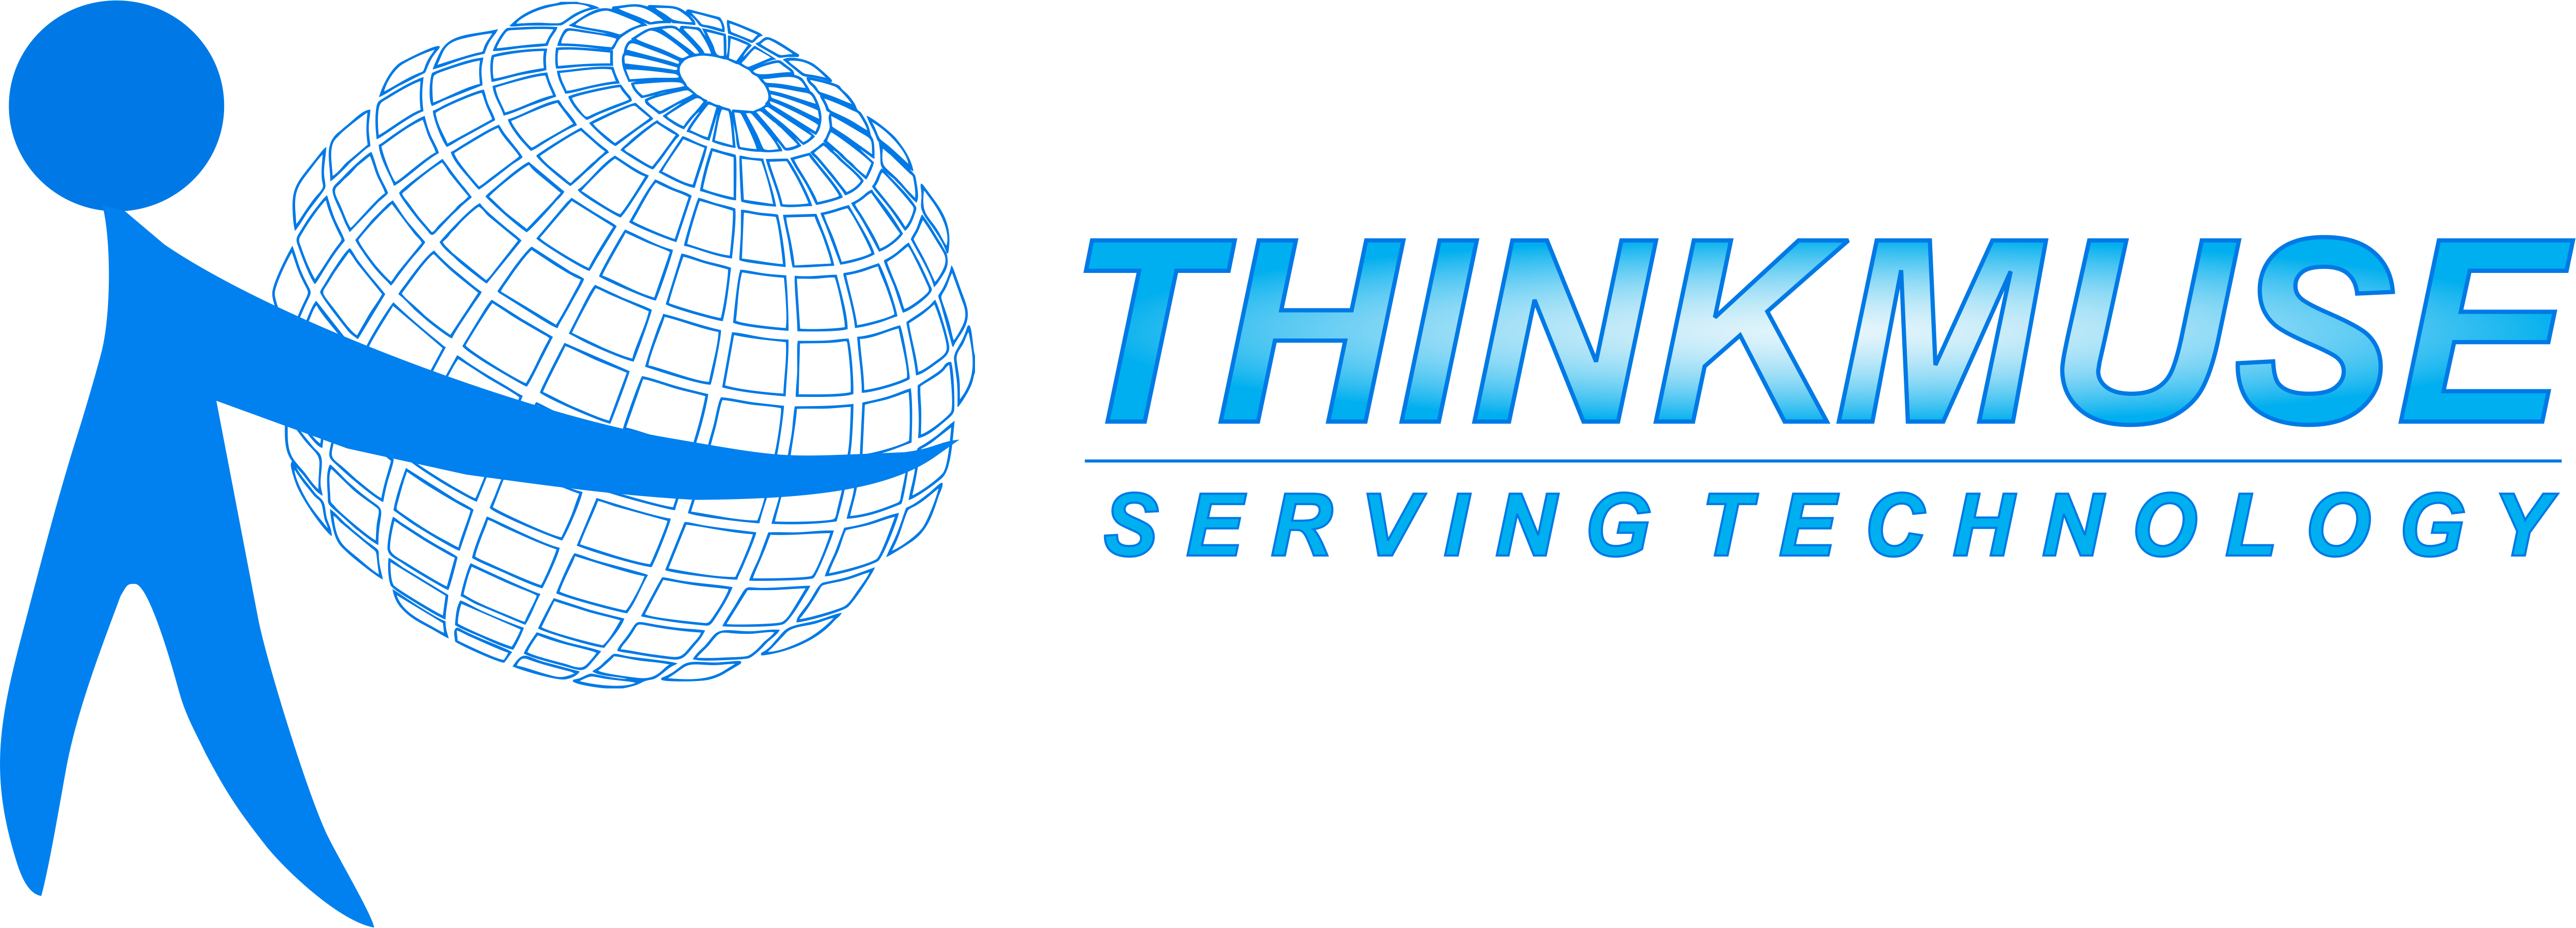 ThinkMuse Serving Technology